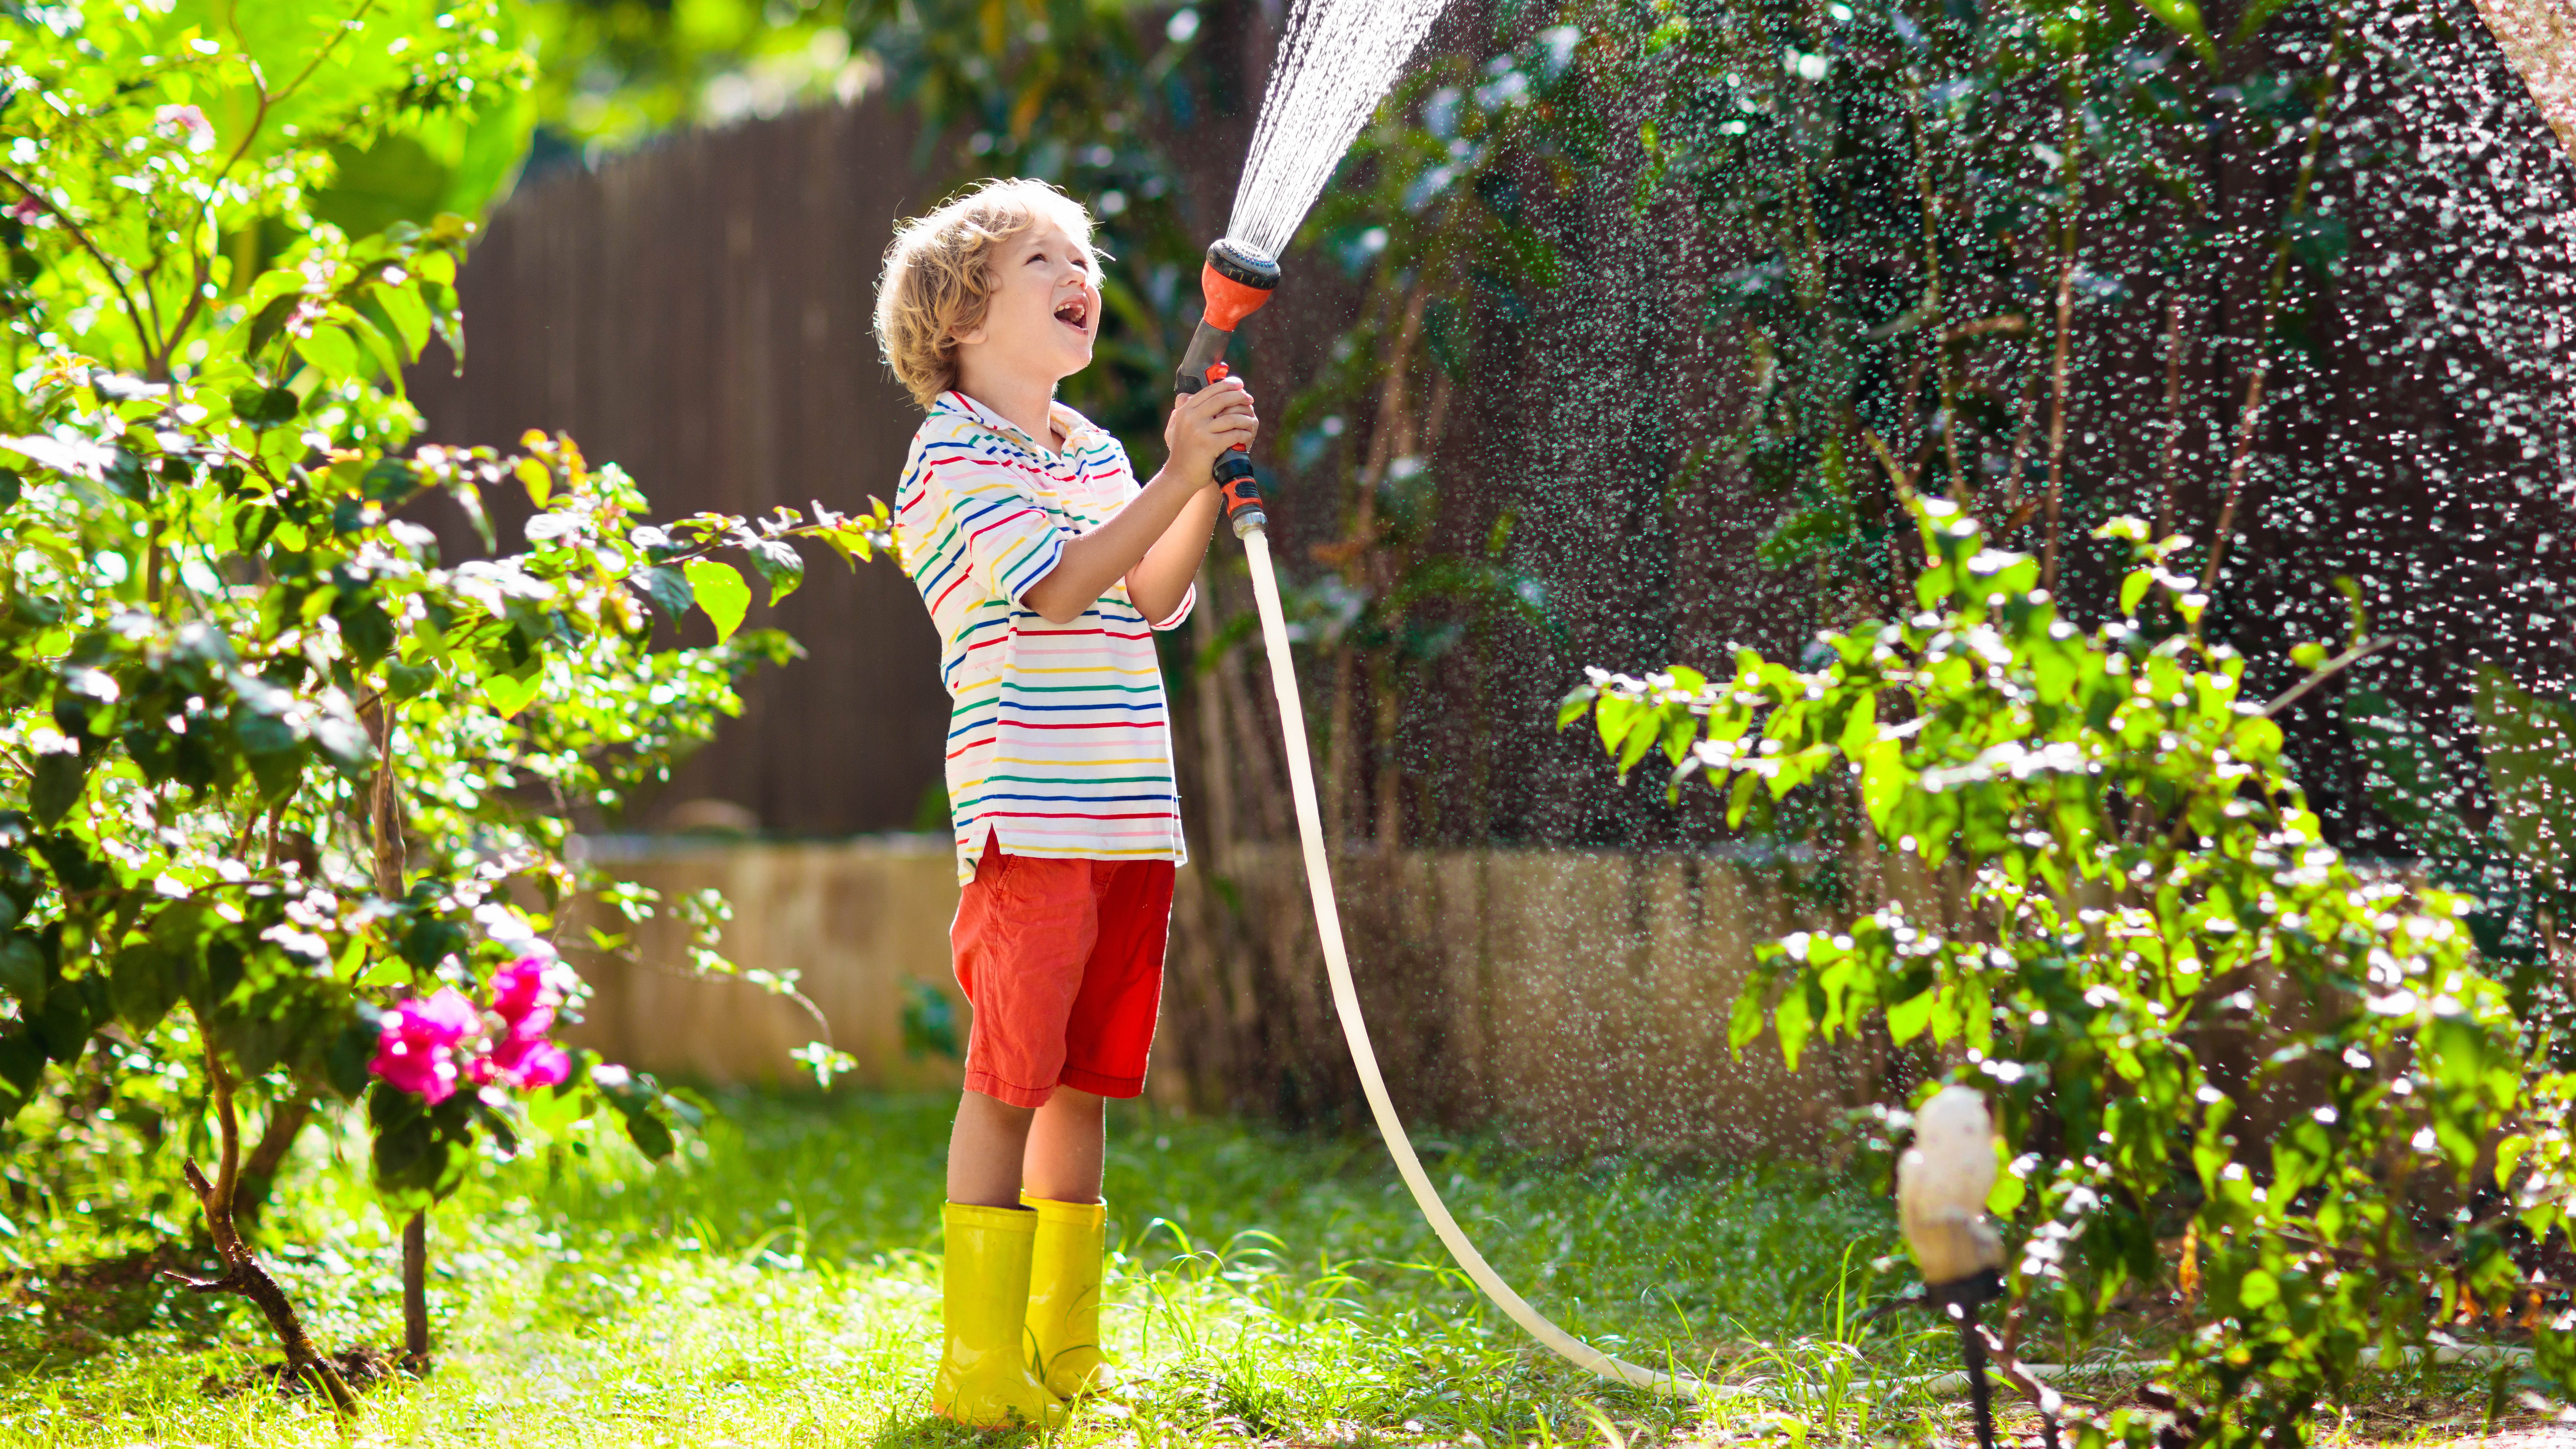 A child spraying a hose upwards at plants